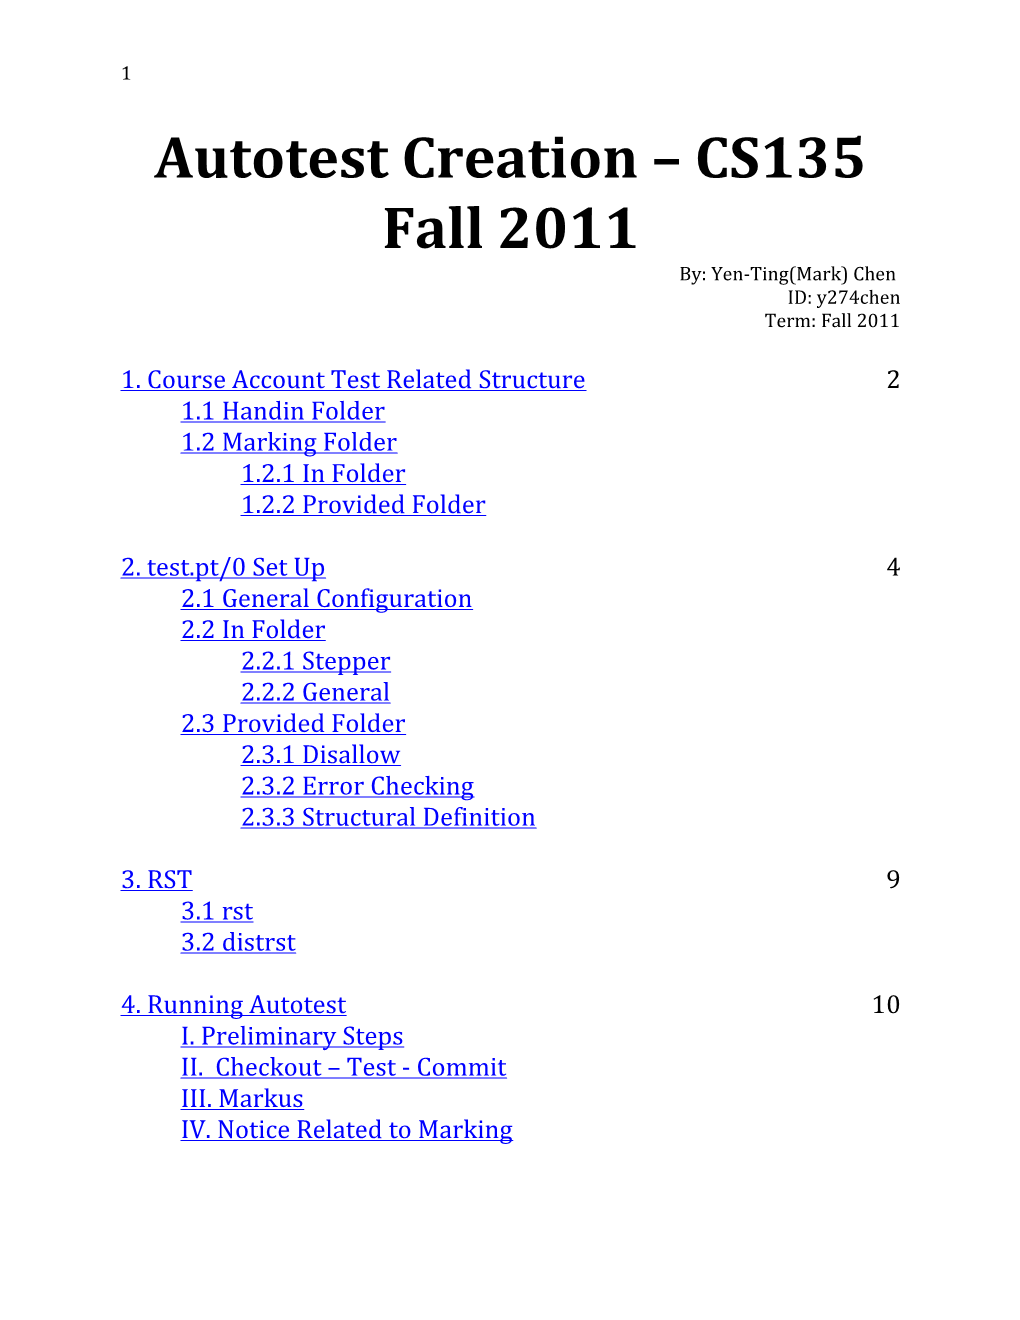 Autotest Creation CS135 Fall 2011